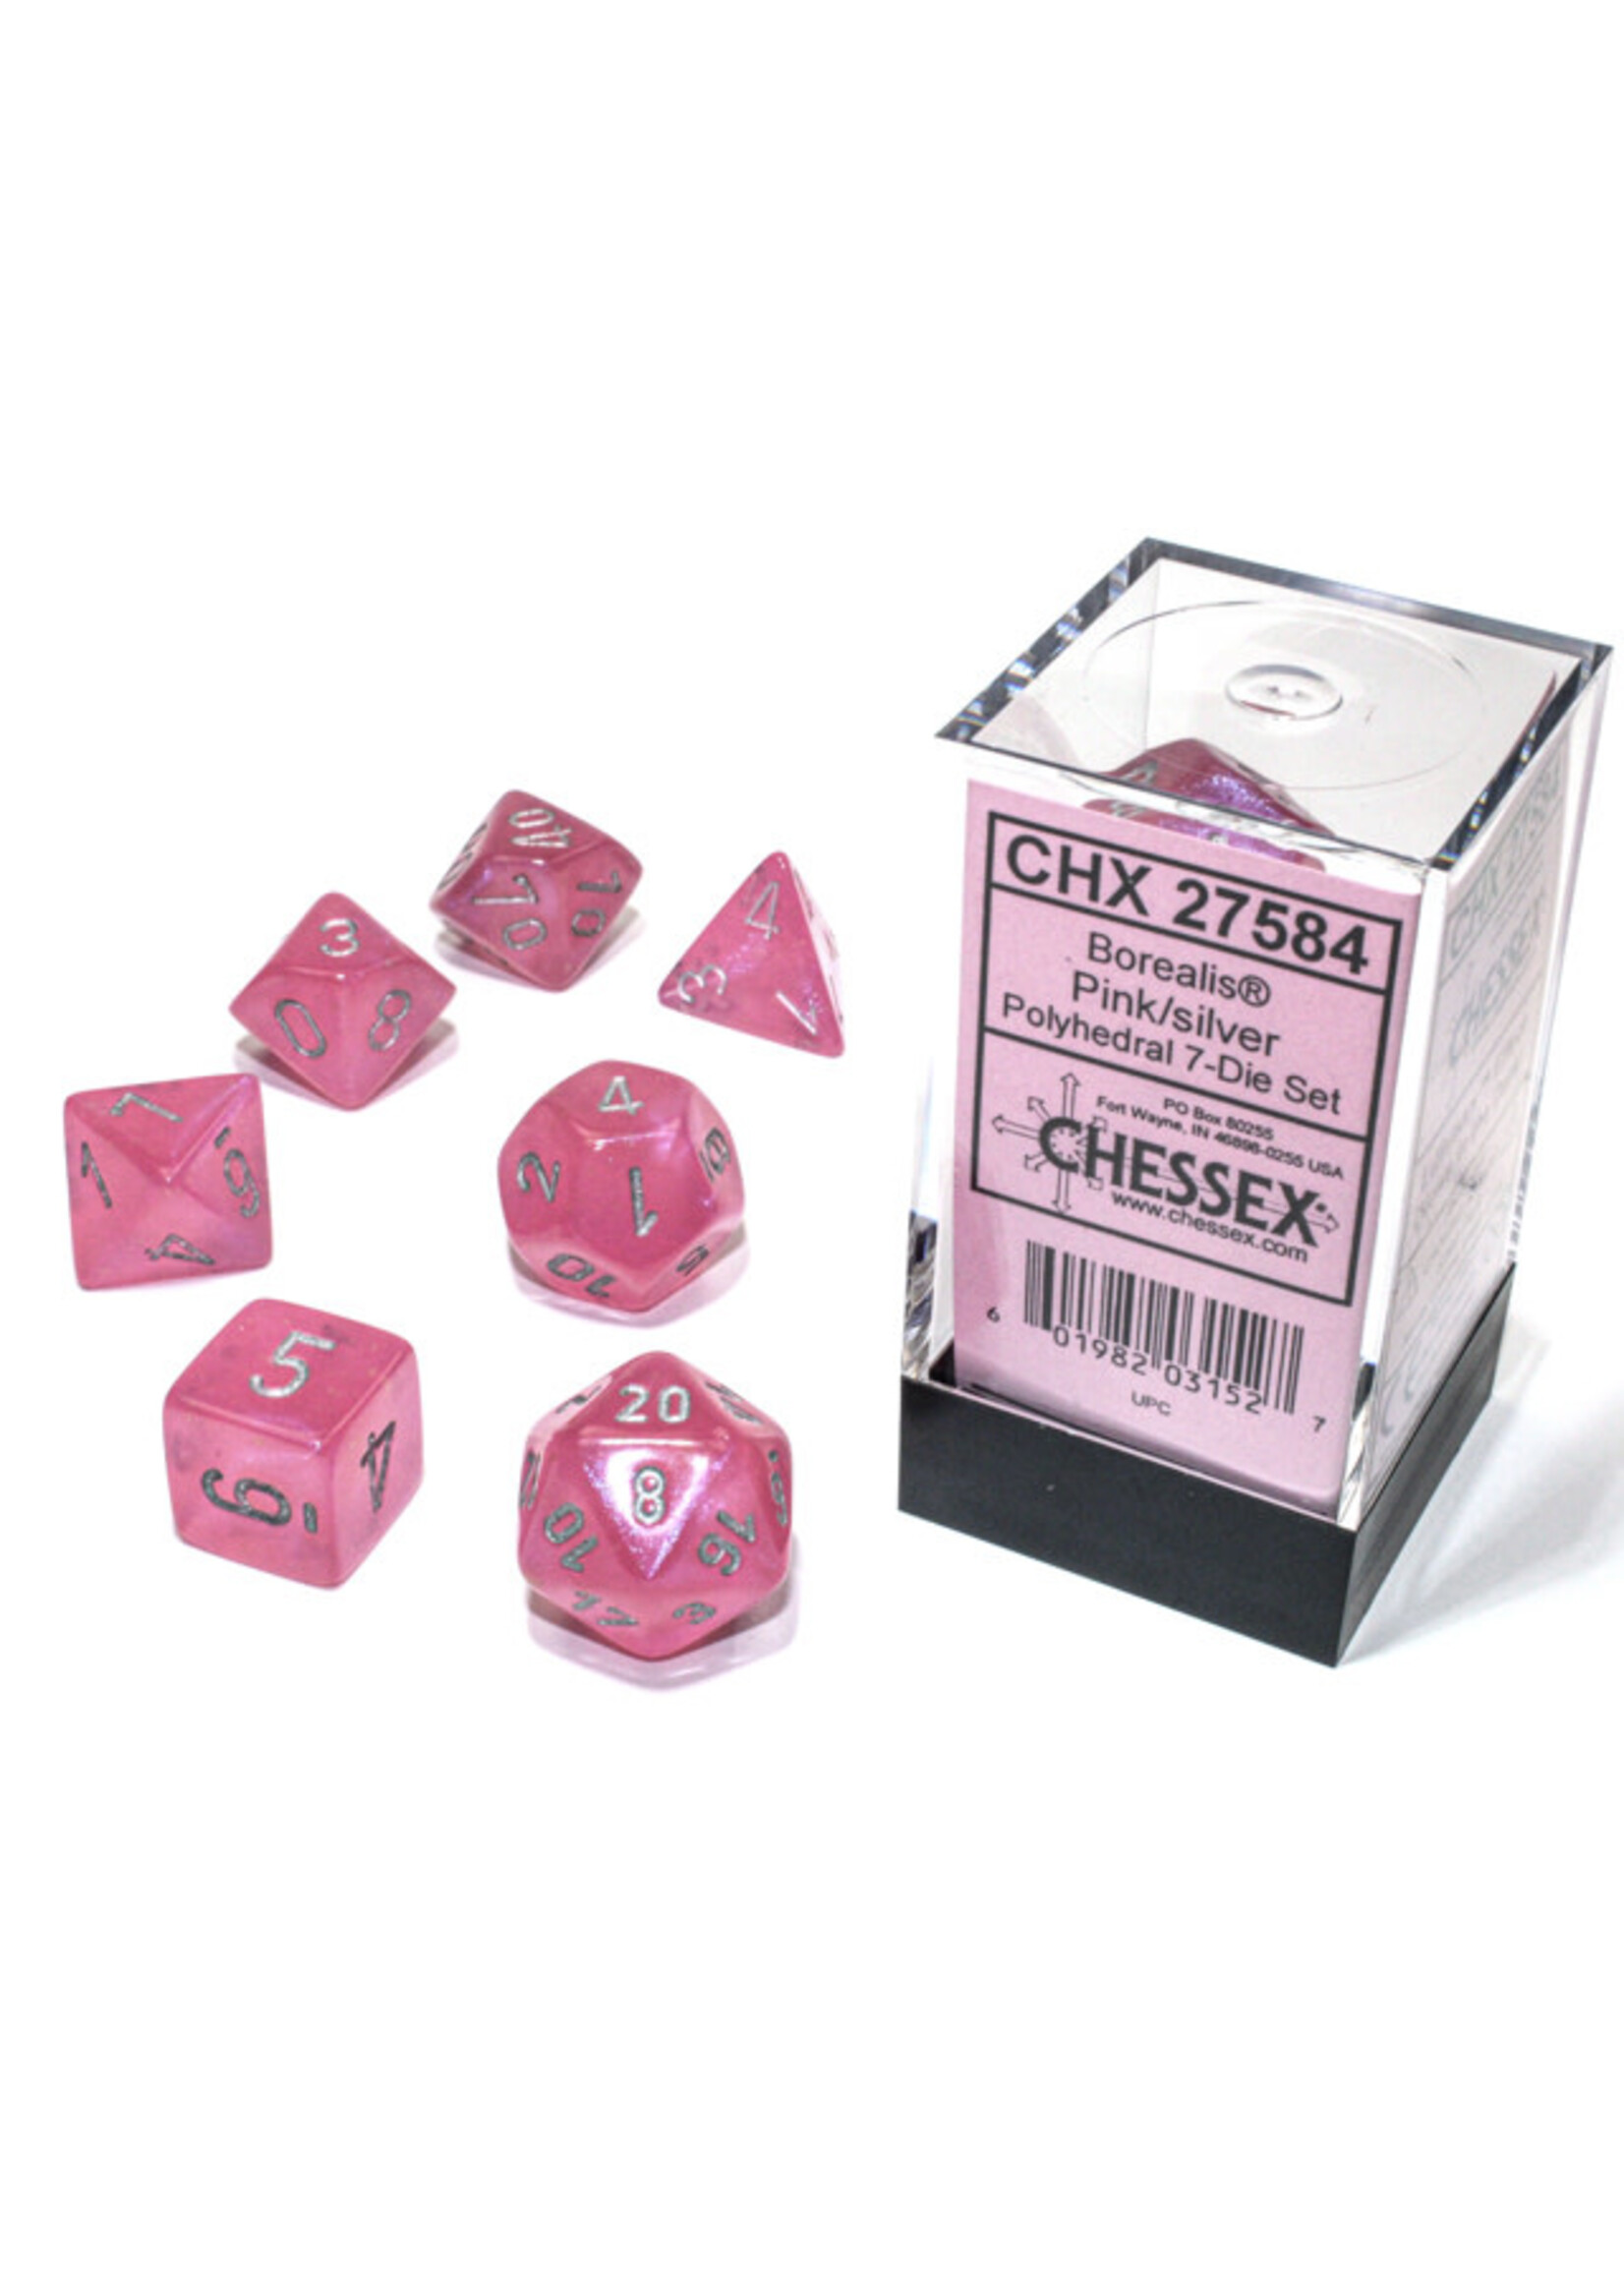 Chessex Dice RPG 27584 7pc Borealis Pink/Silver Luminary